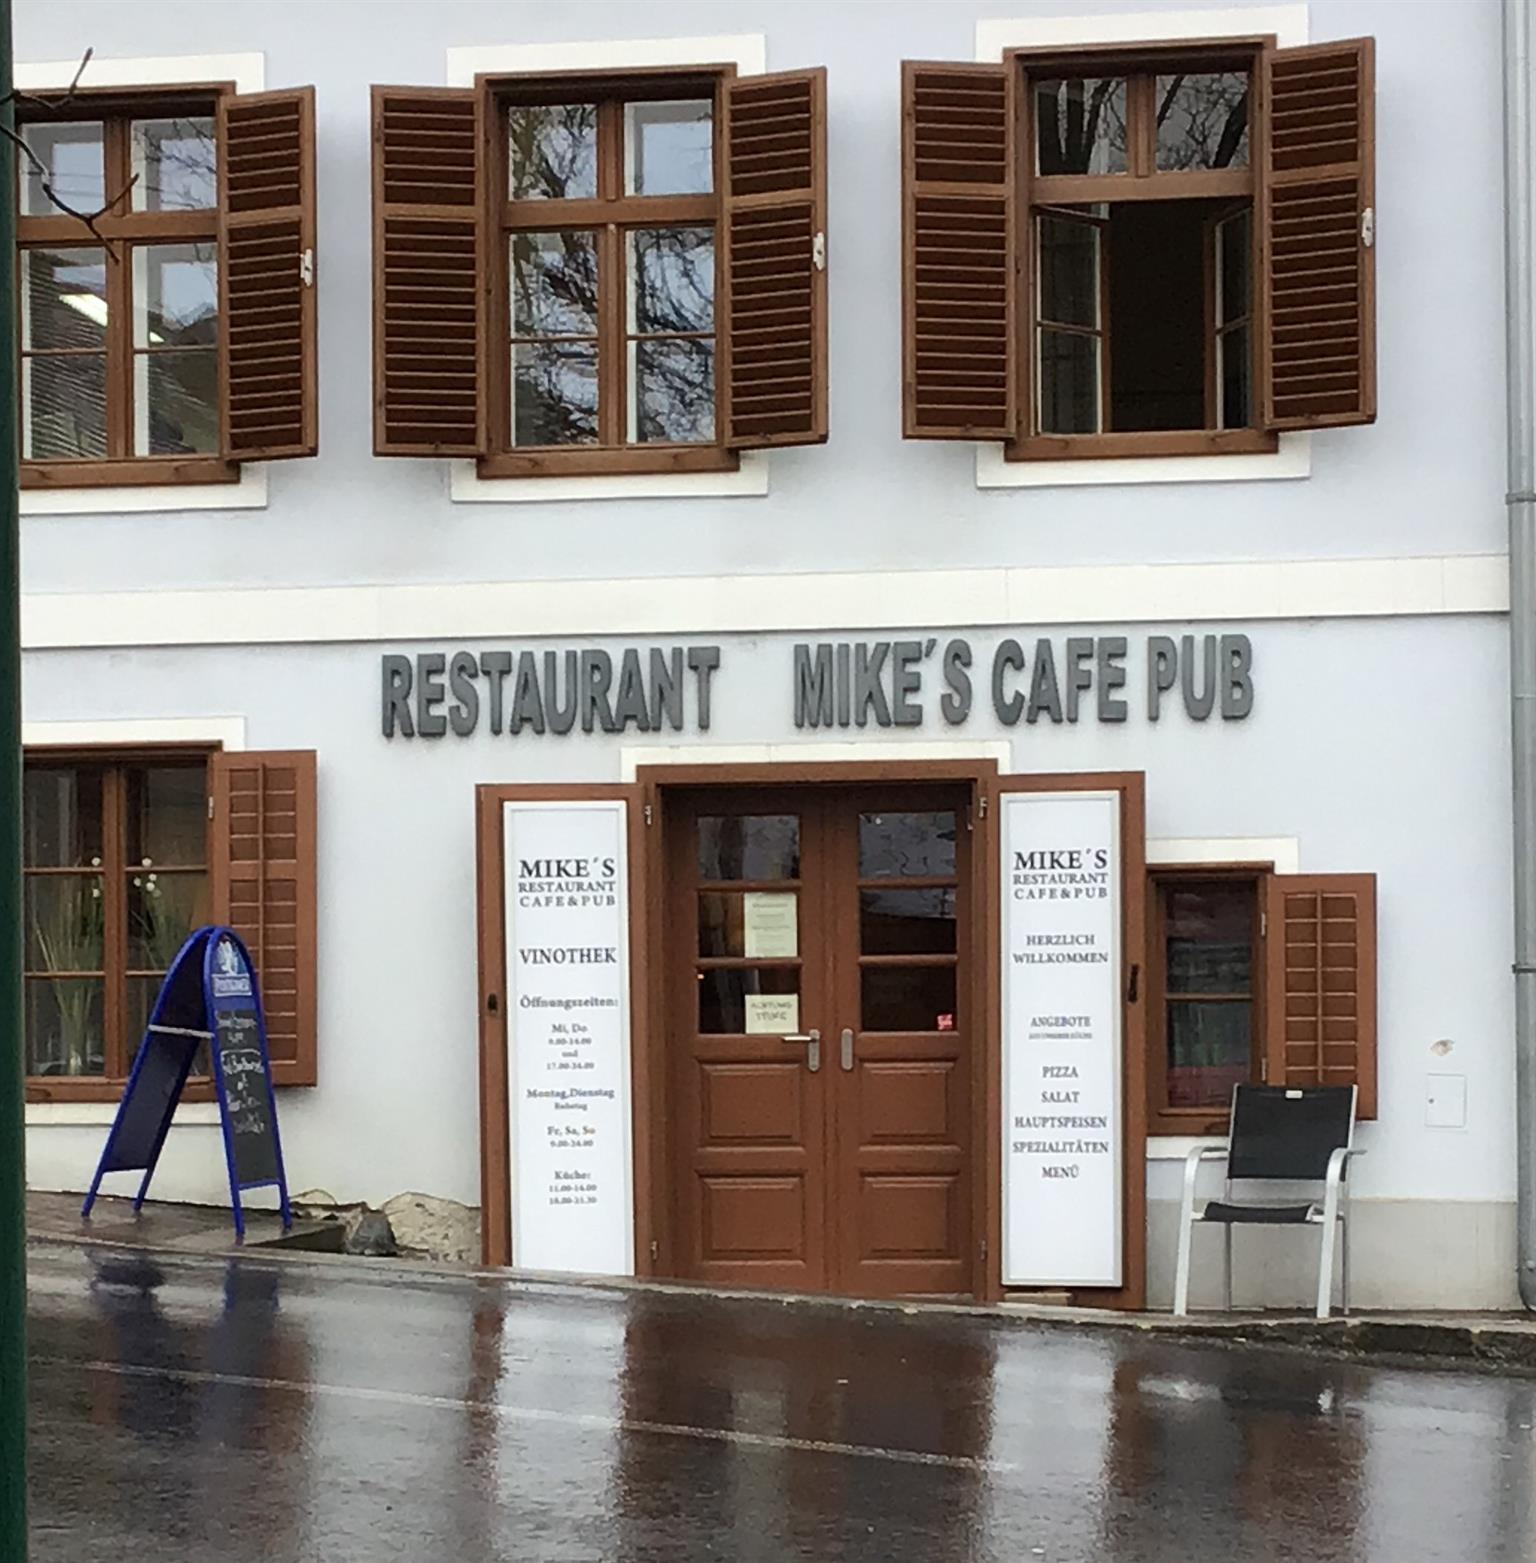 Mike's Cafe Pub